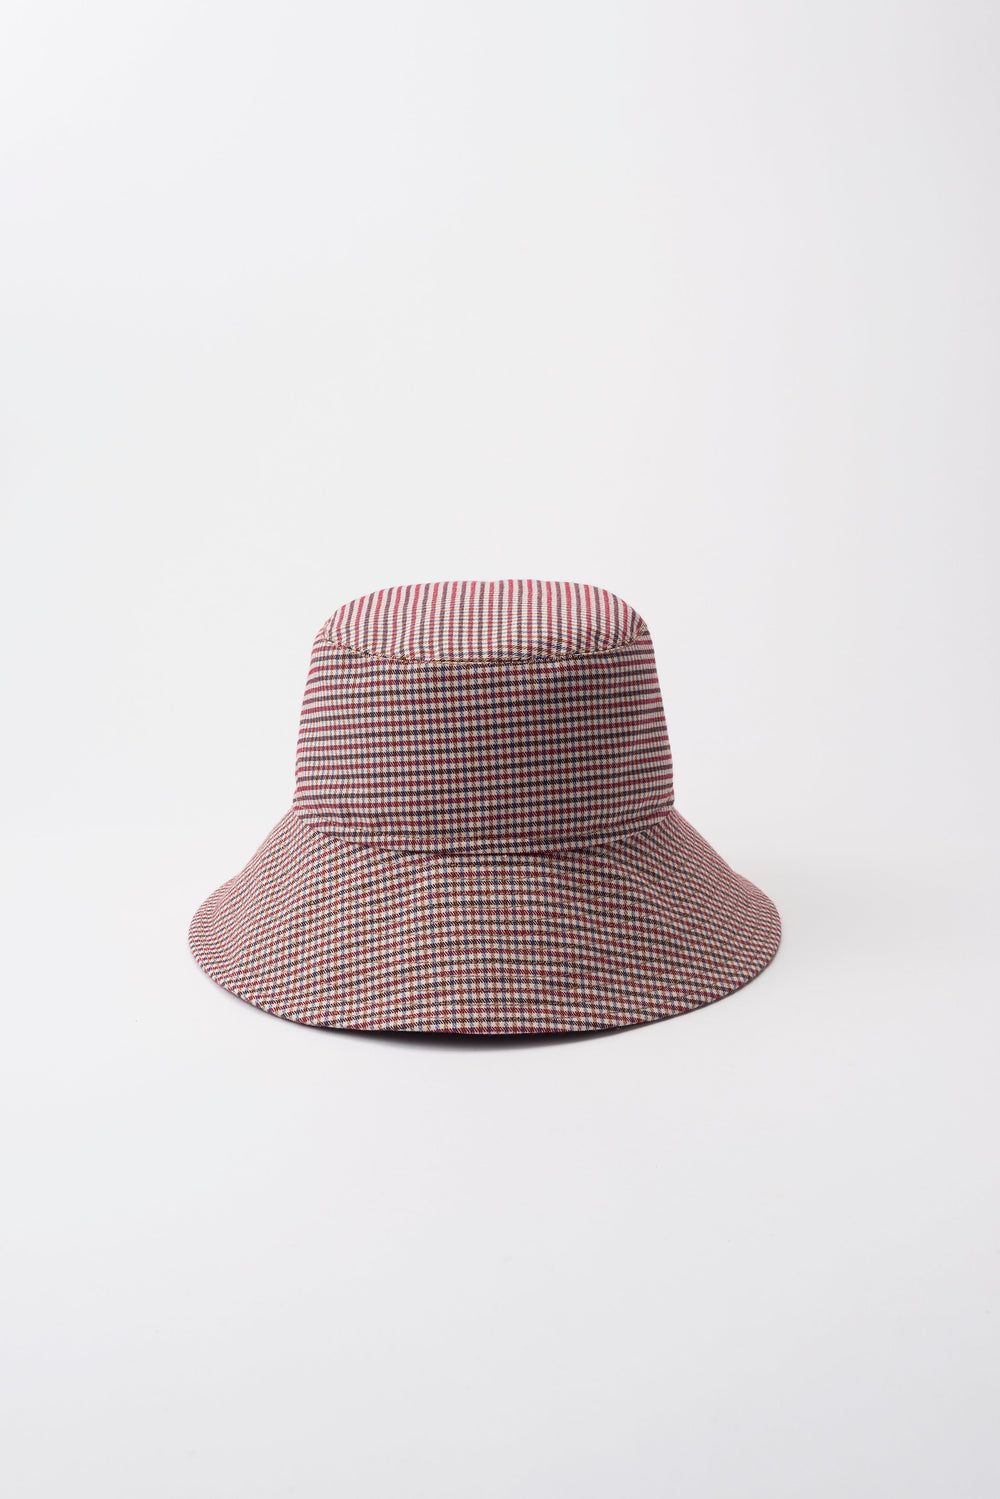 Hudson bucket hat